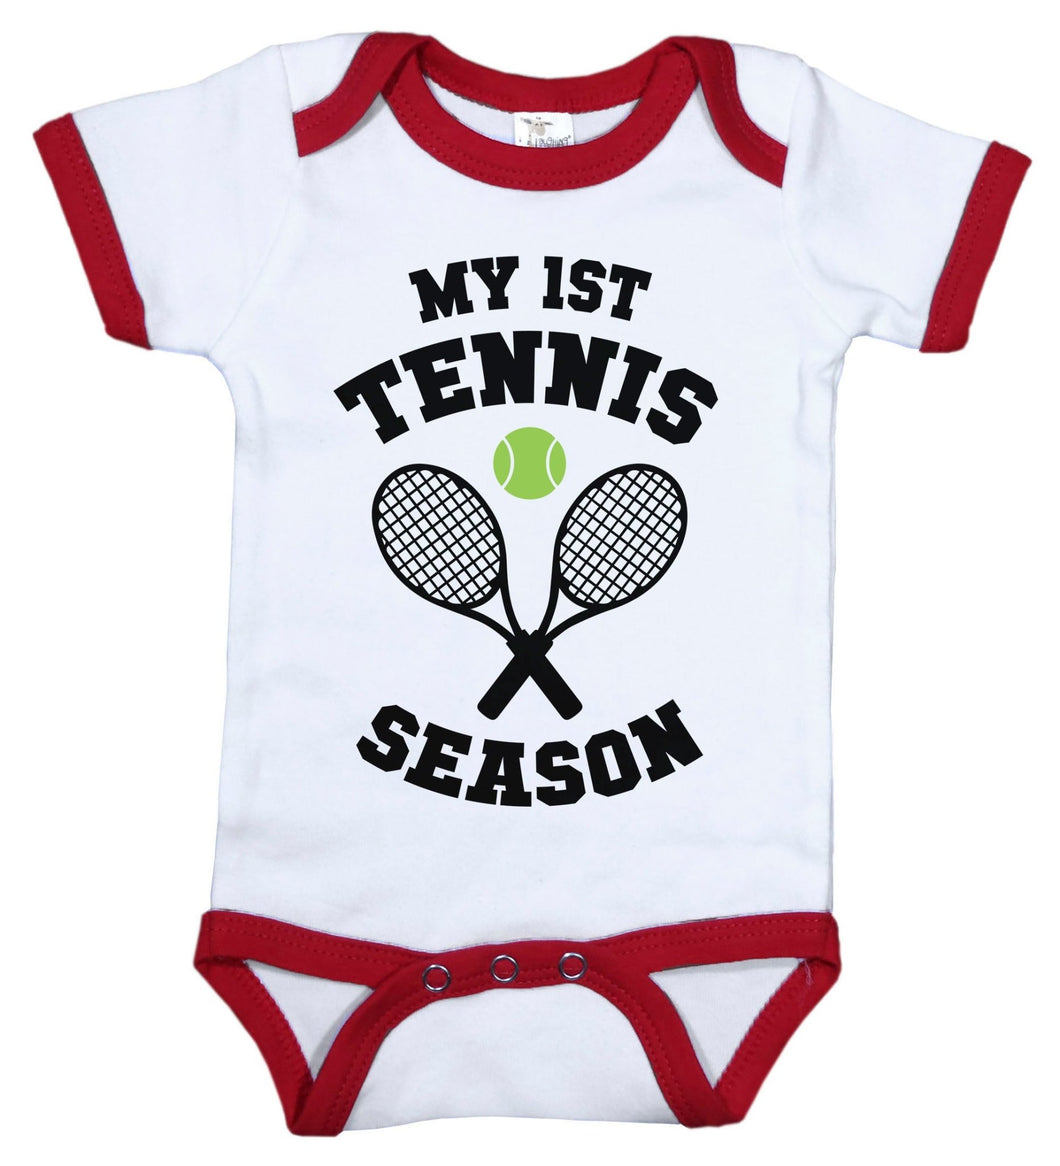 My First Tennis Season / Tennis Ringer Onesie - Baffle